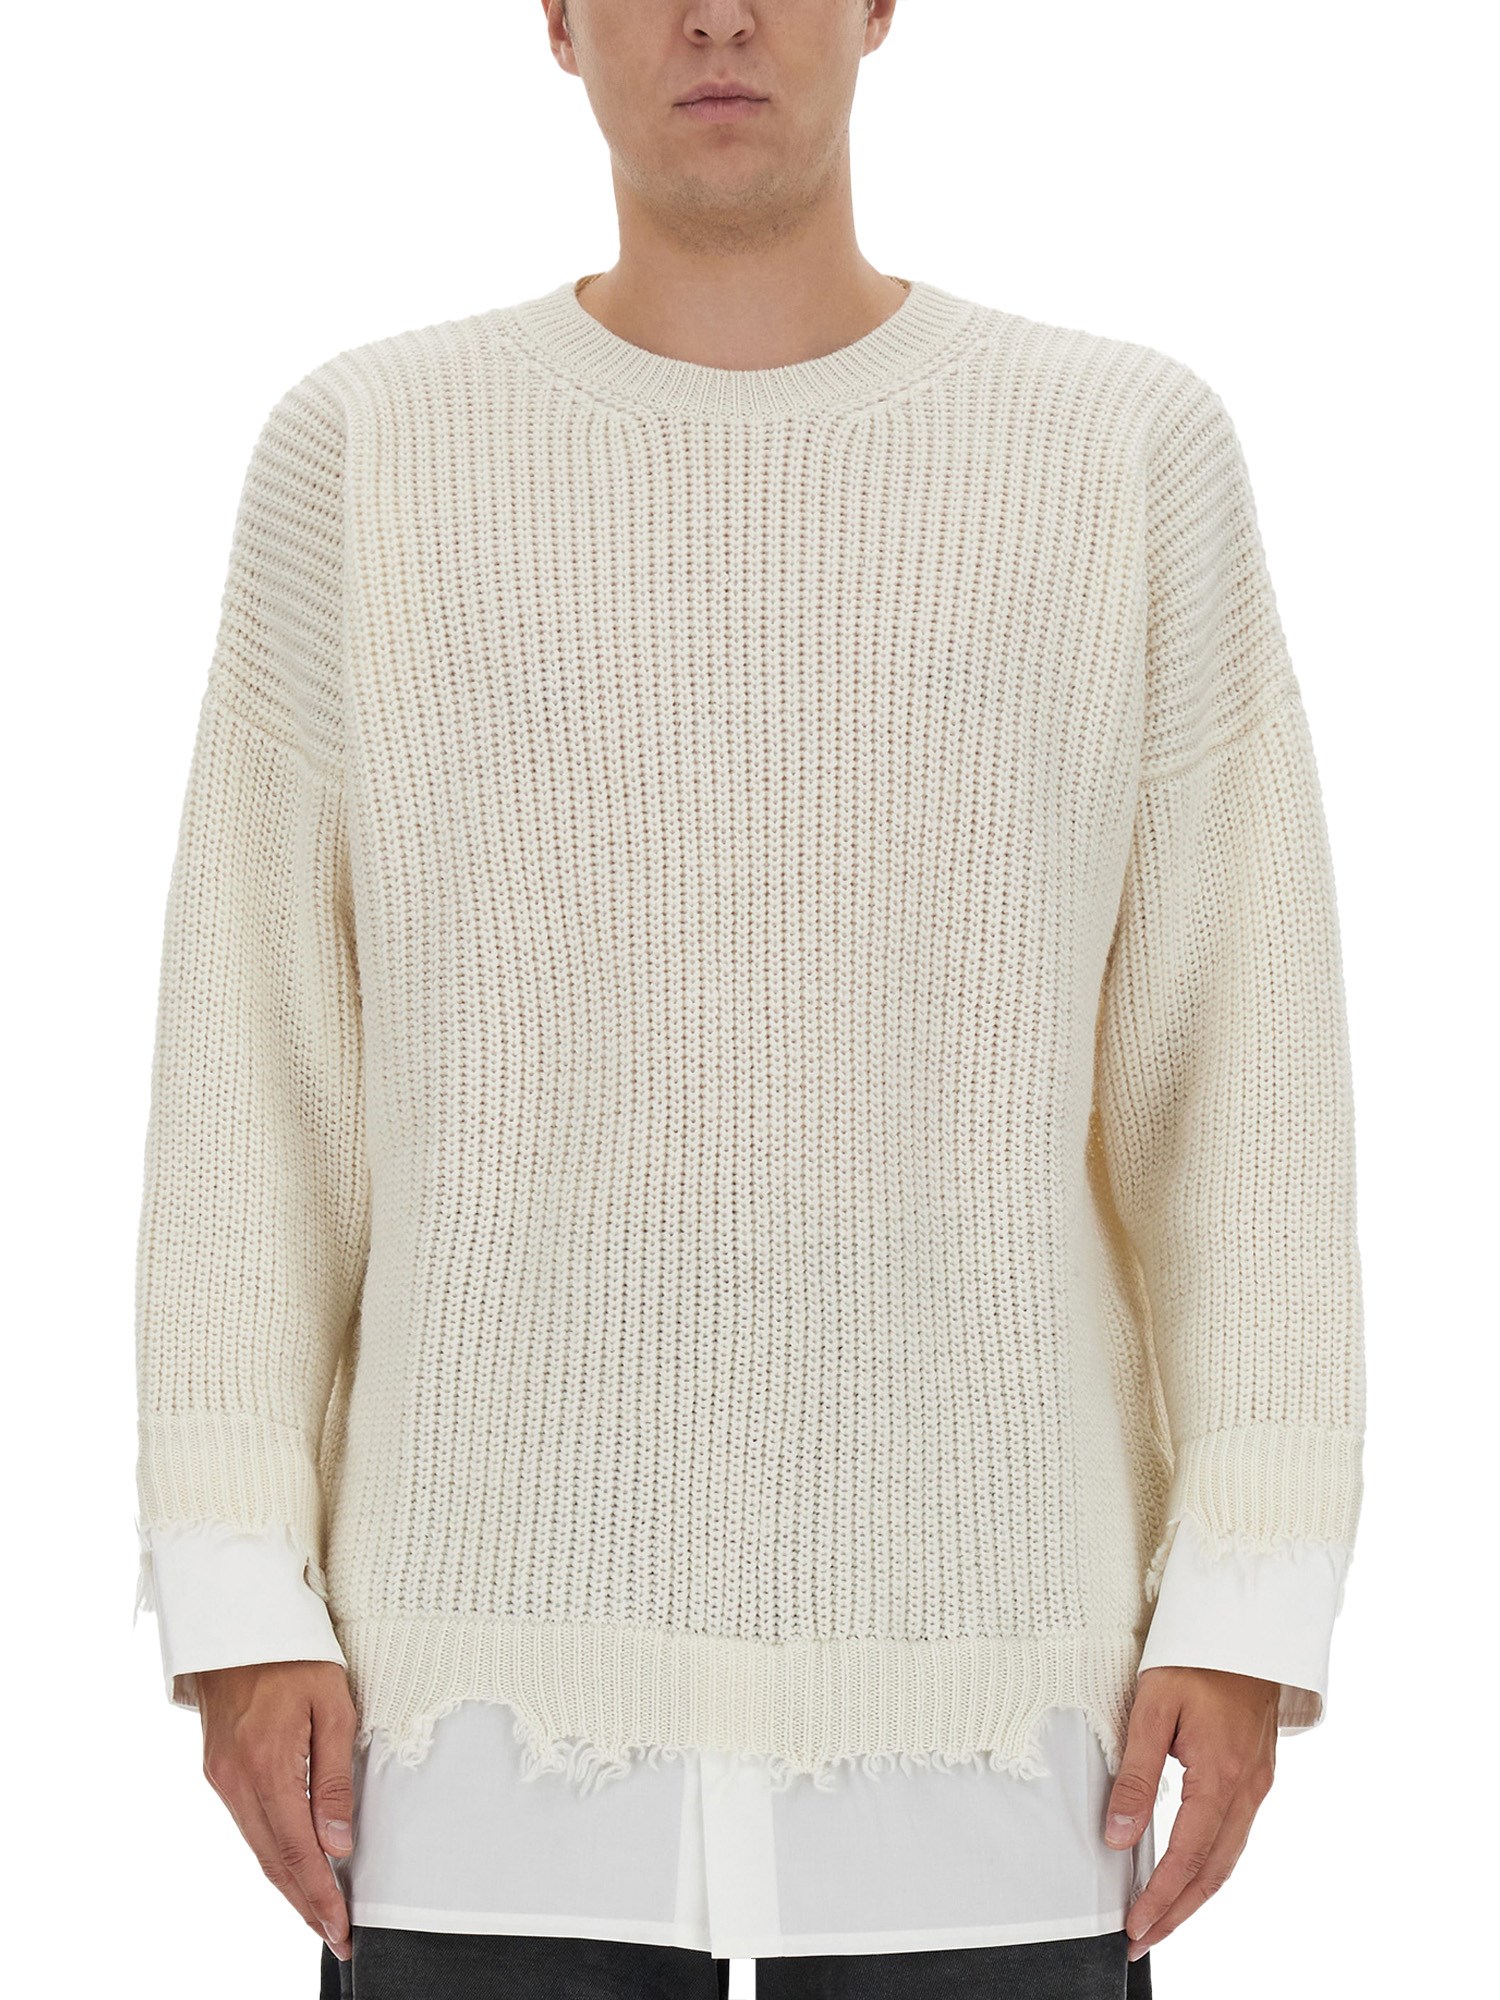 mm6 maison margiela shirt bottom sweater